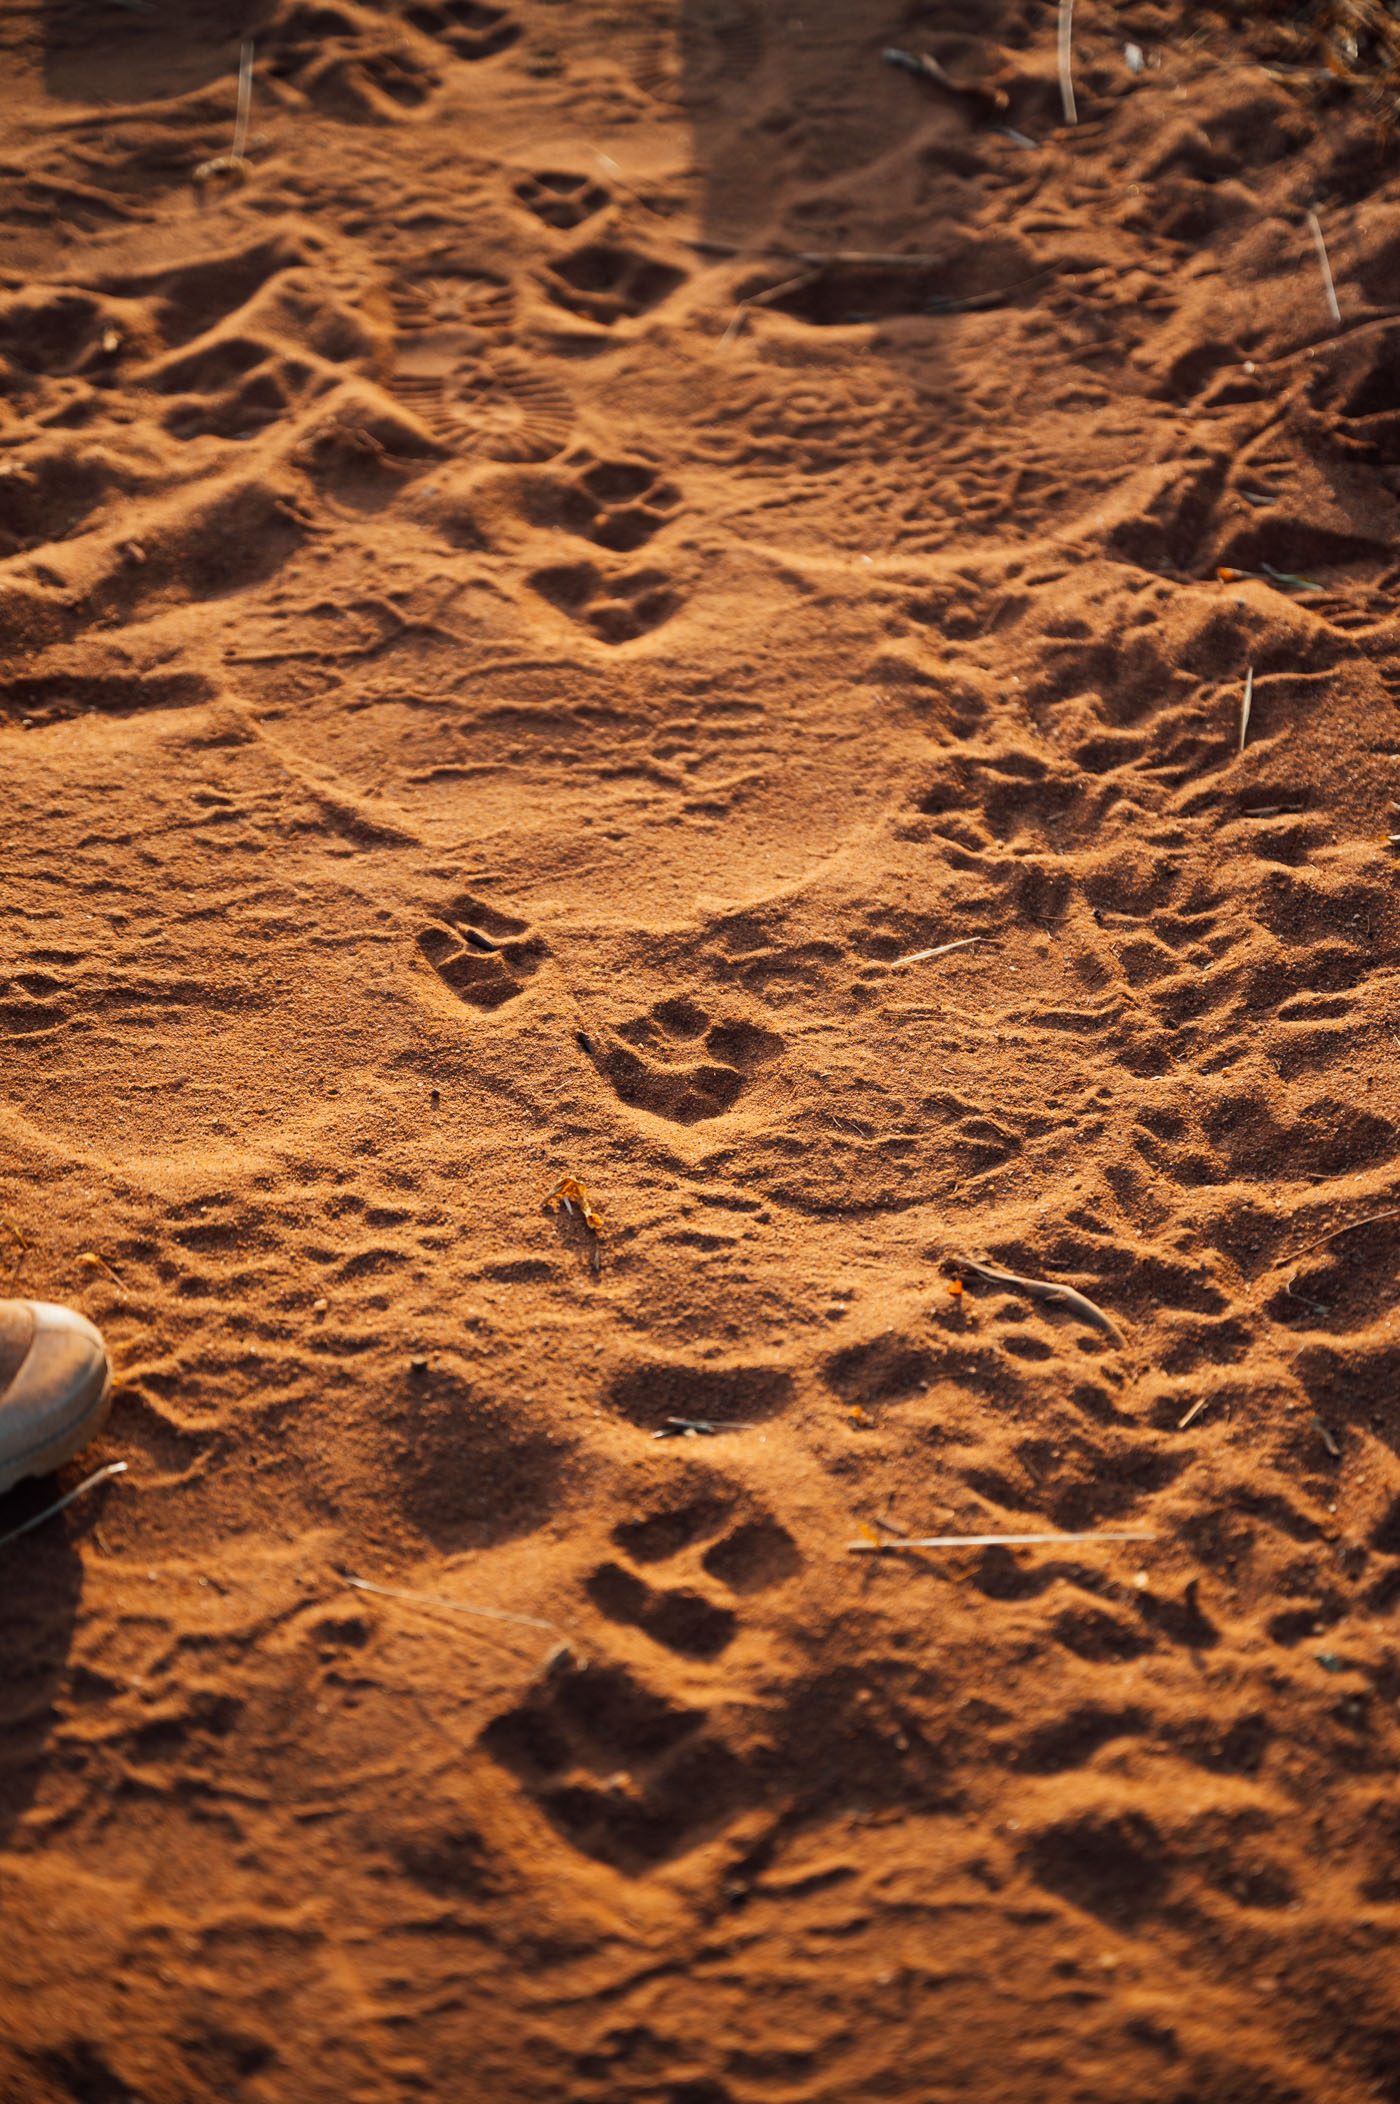 Leopard tracks as seen on Walking Safari in the Mbulia Conservancy with Kipalo Hills